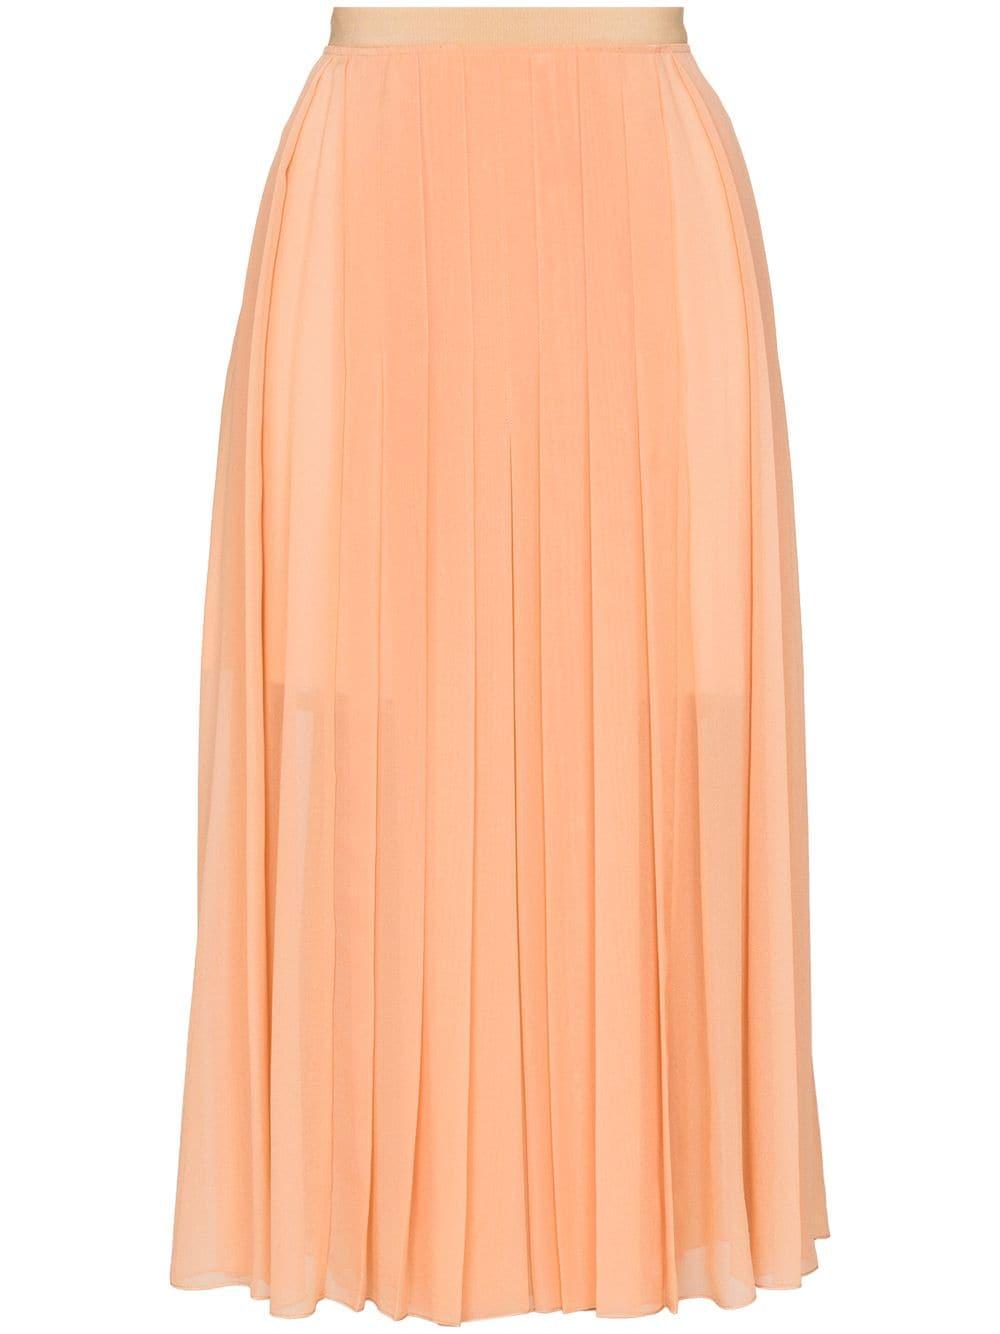 Chloé Semi-sheer Pleated Midi Skirt in Orange | Lyst